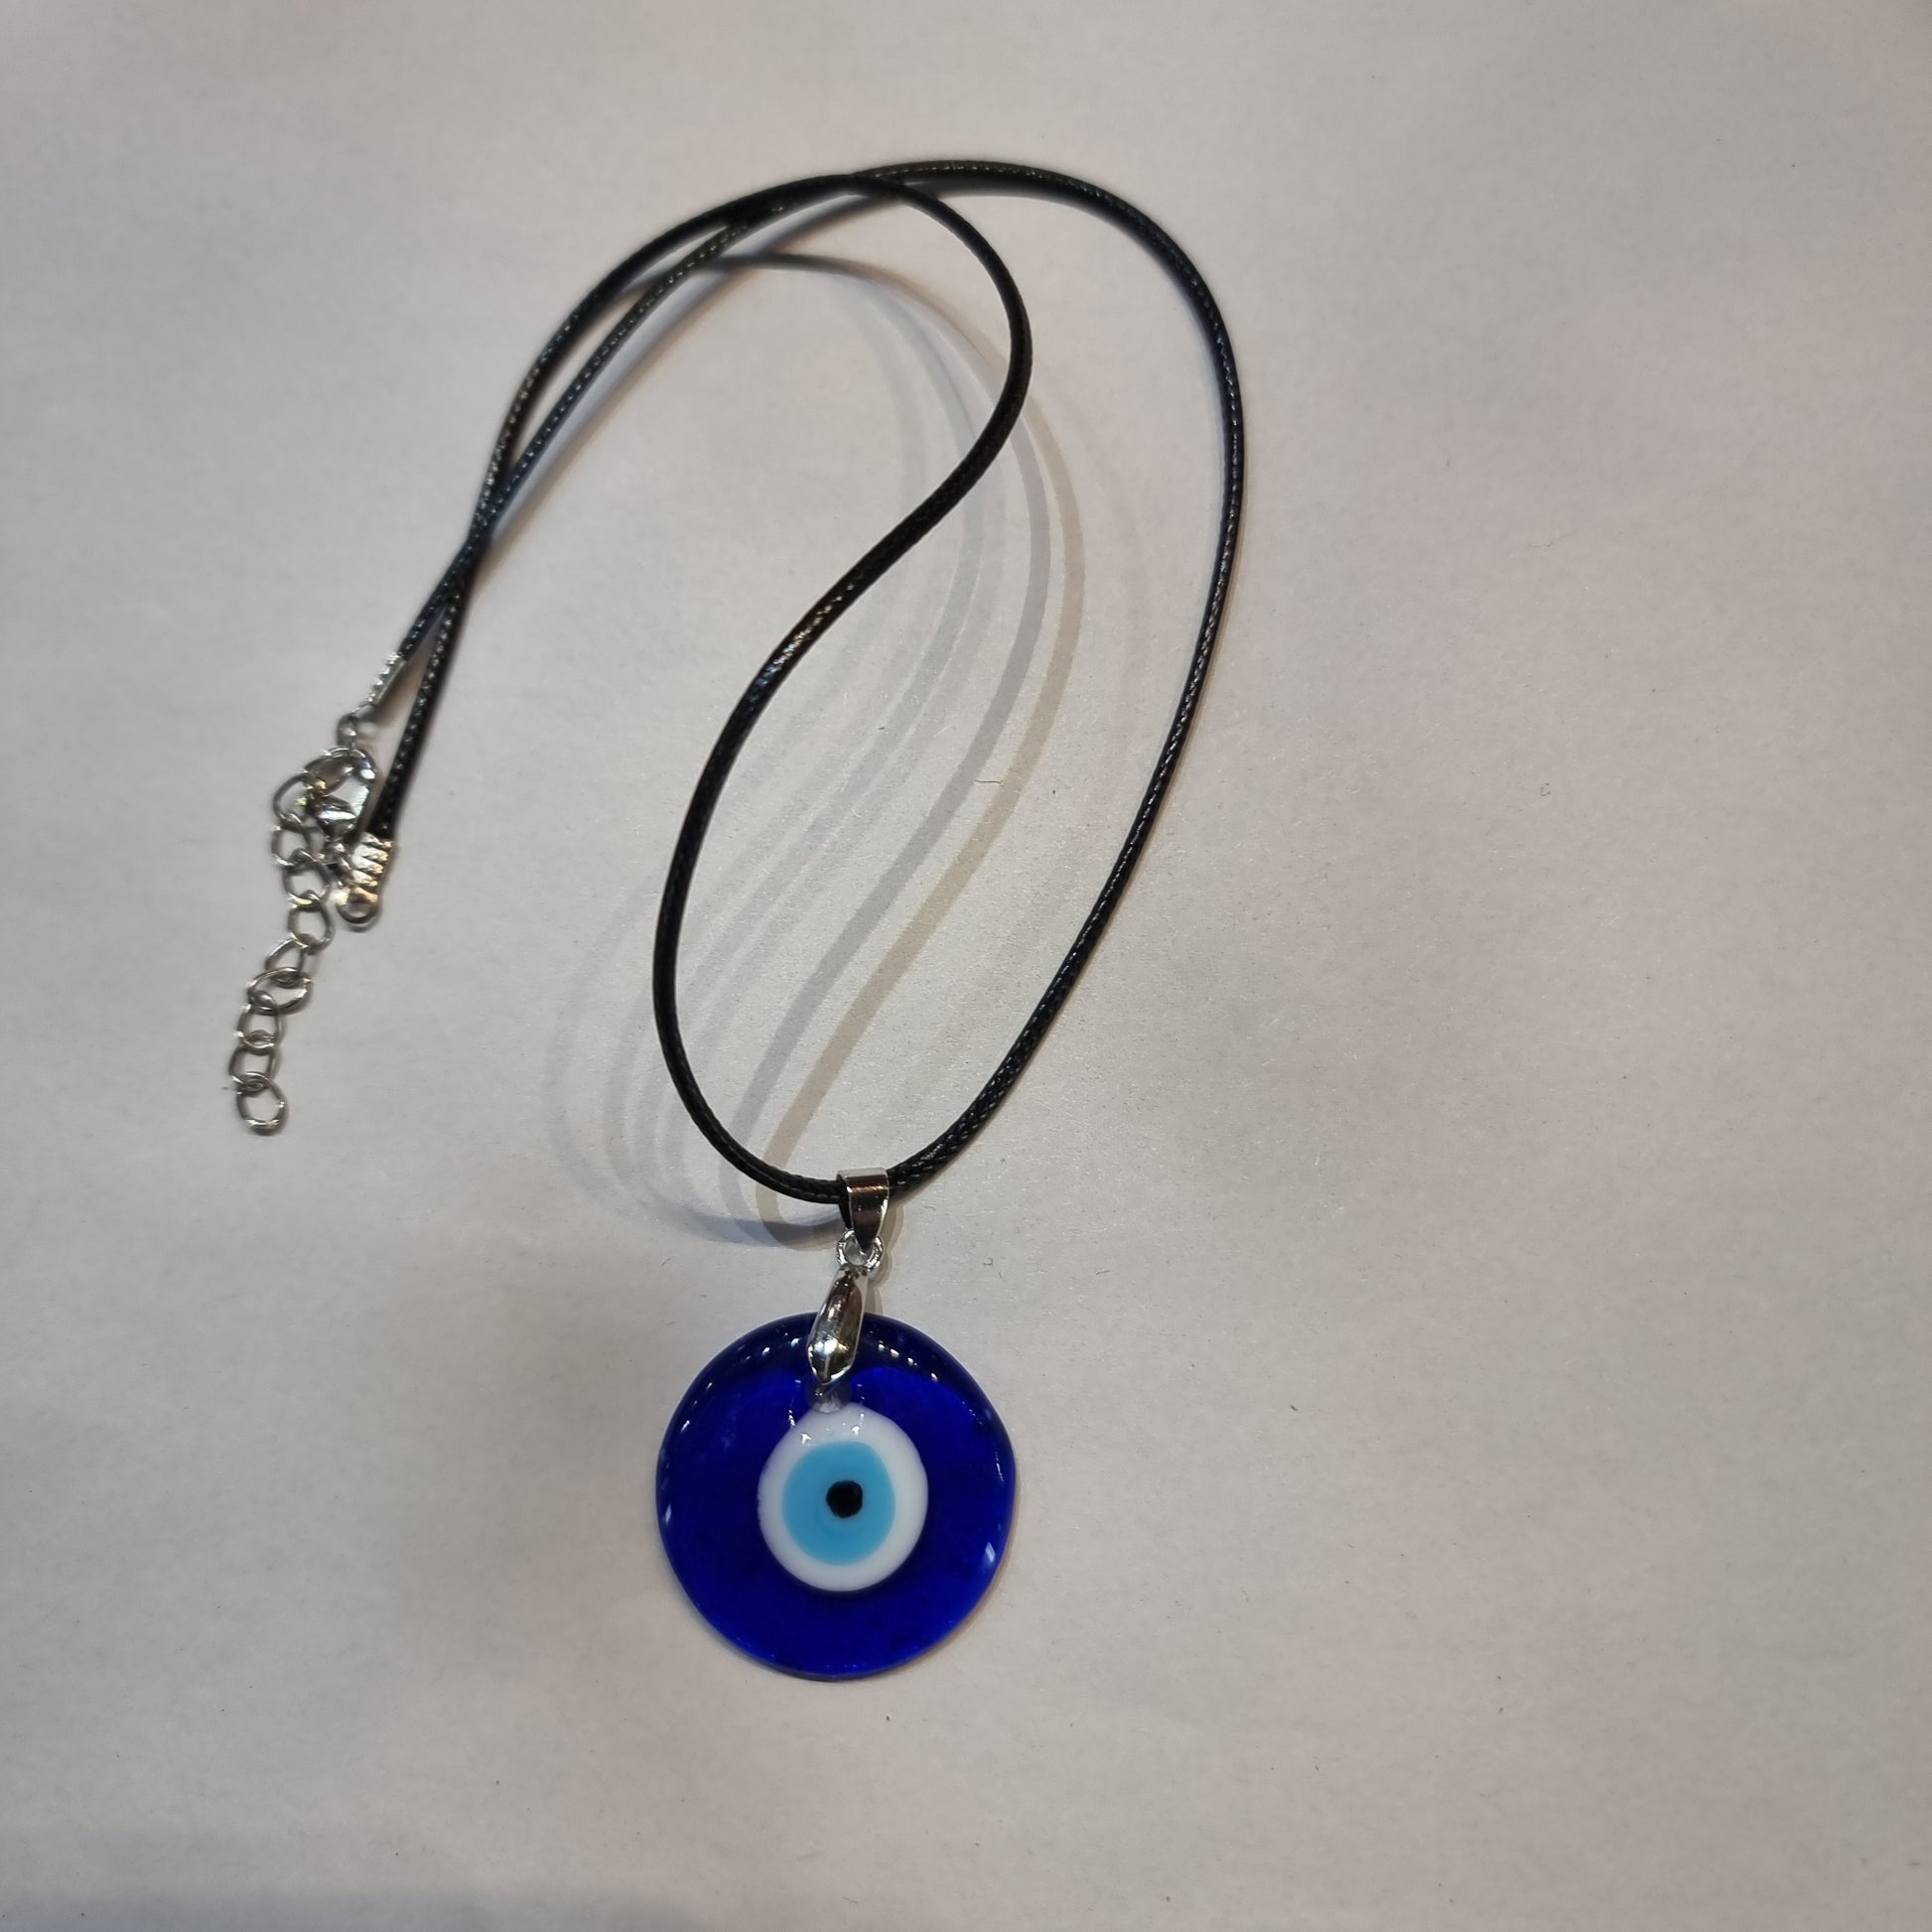 Evil eye pendants collection - Rivendell Shop